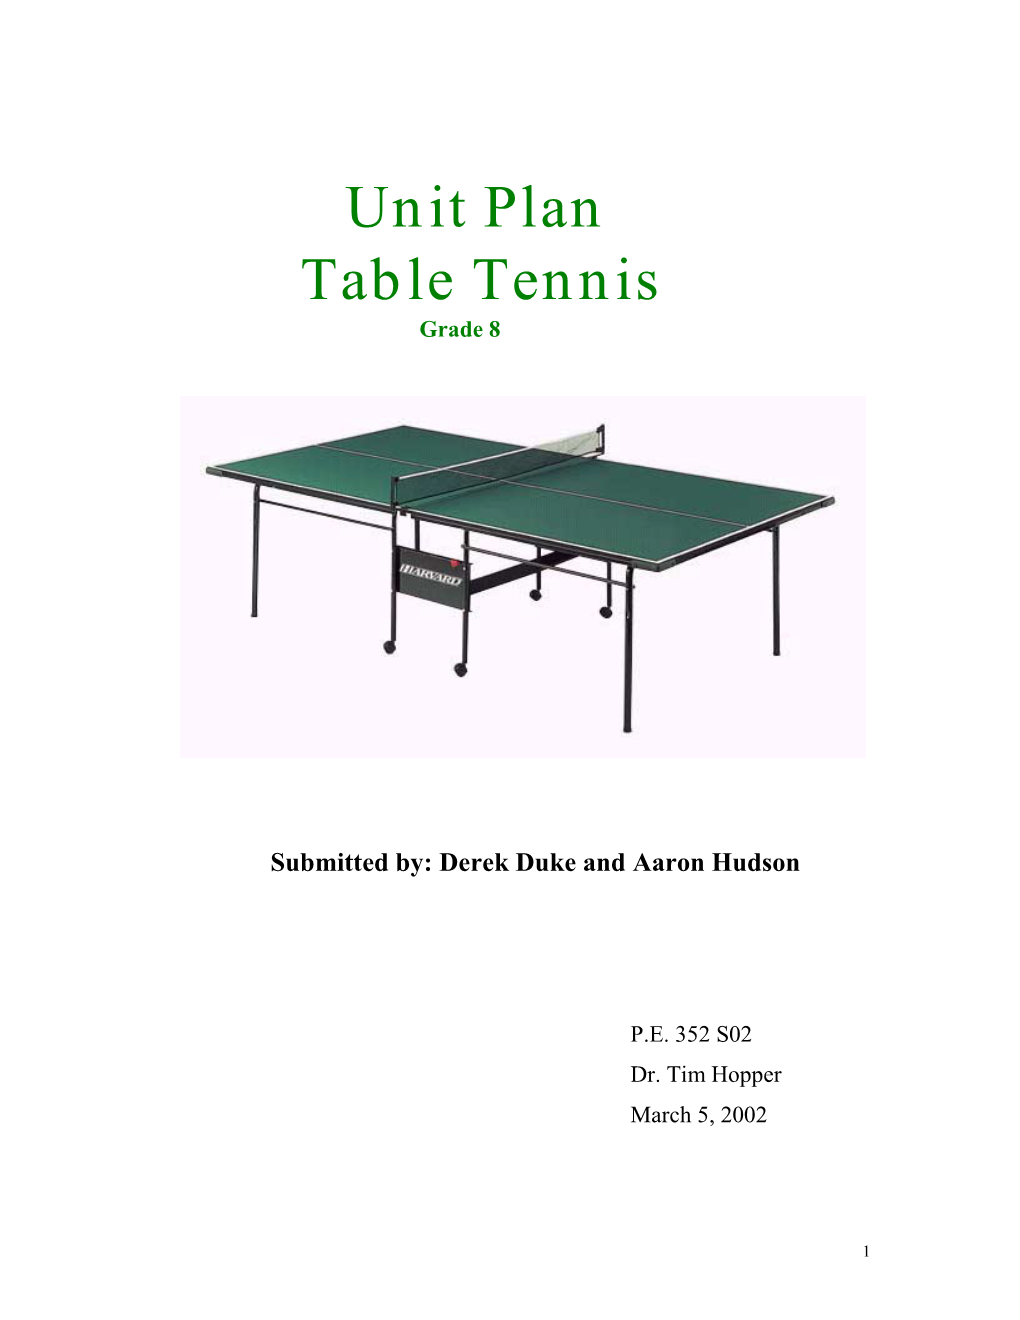 Unit Plan Table Tennis Grade 8